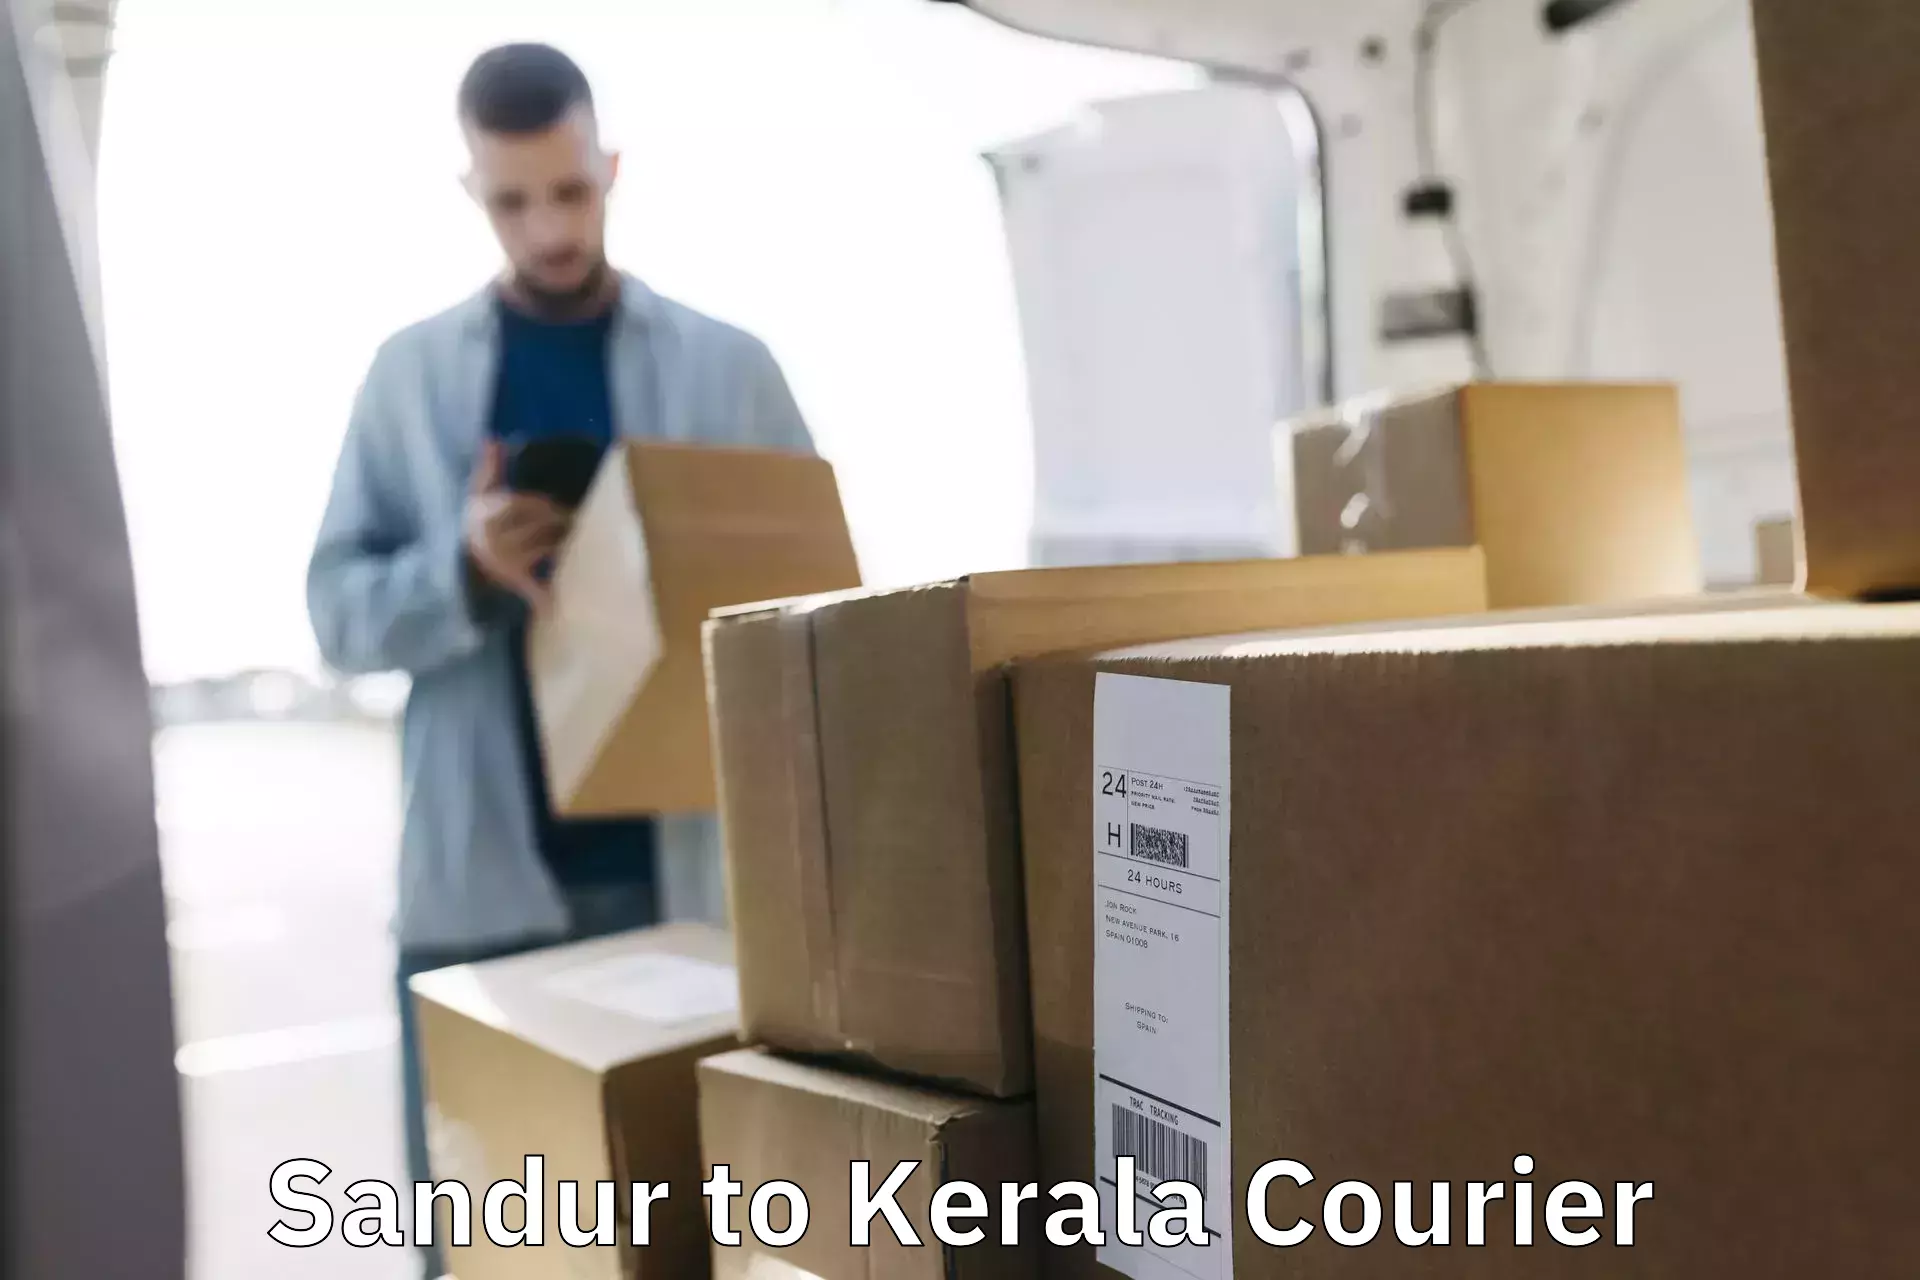 Customer-focused courier Sandur to Kerala